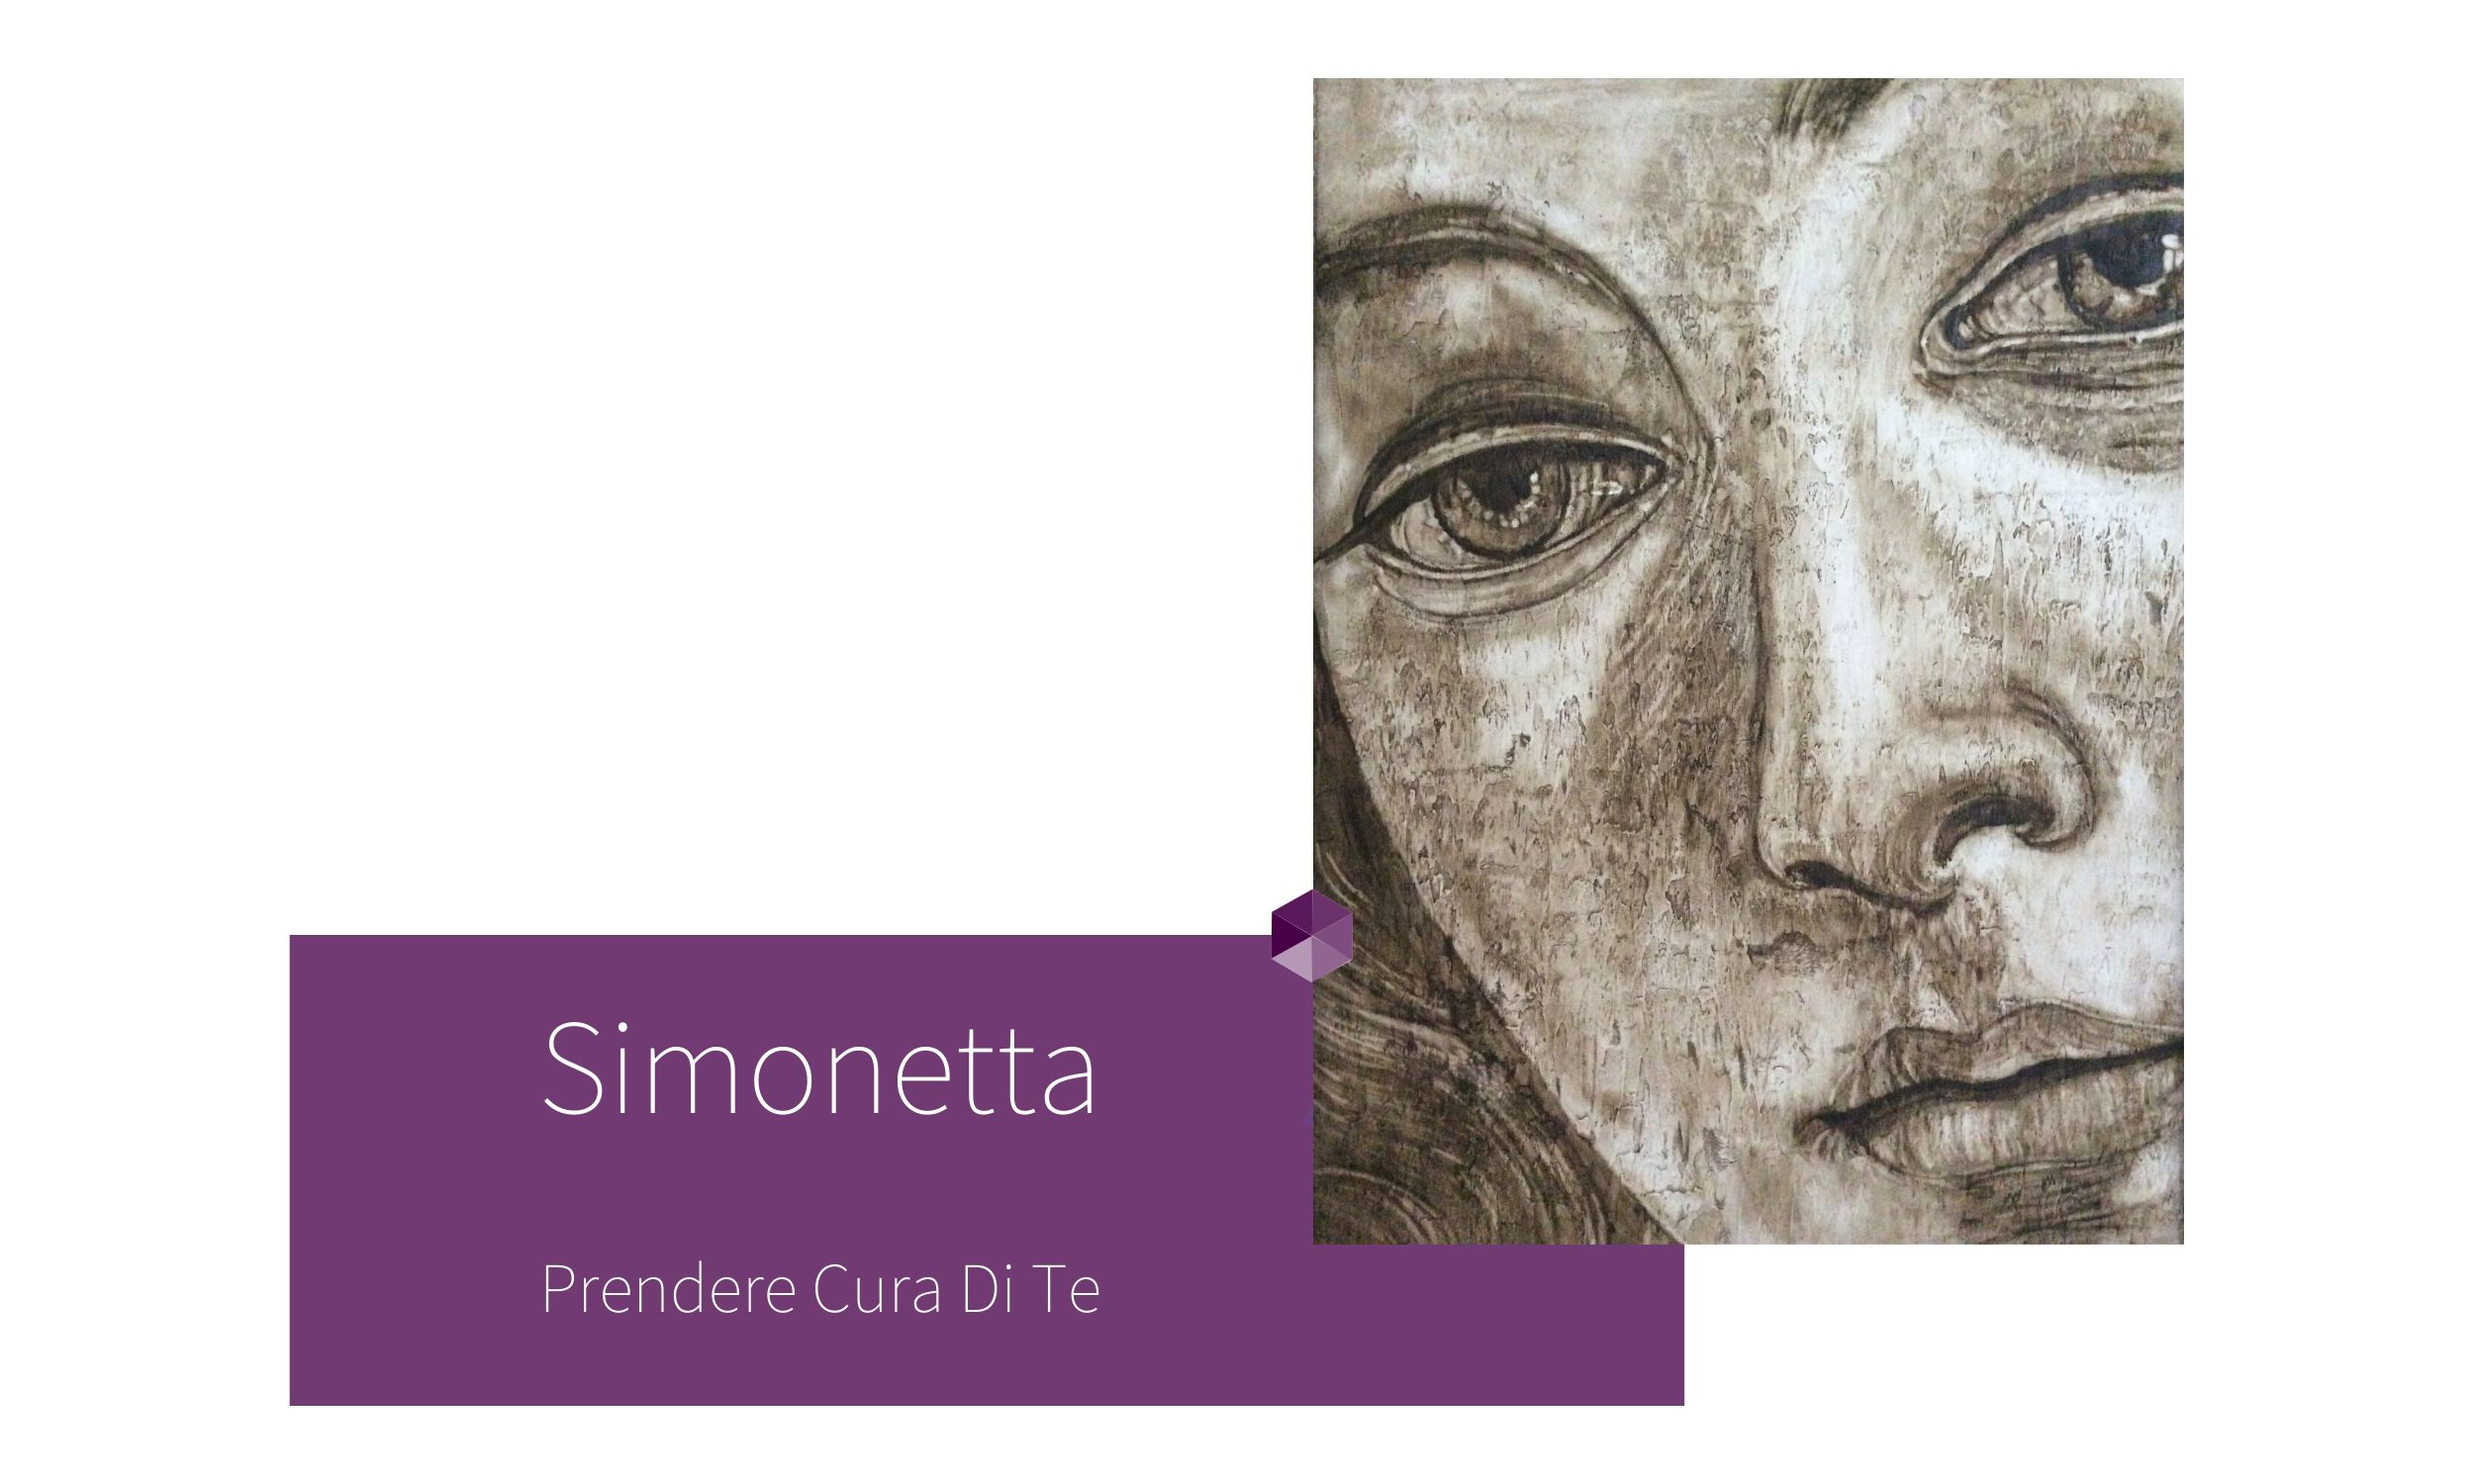 SIMONETTA CATTANEO | por C.J.Ruiz
Colección Flor de Ziur | PRENDERE CURA DI TE